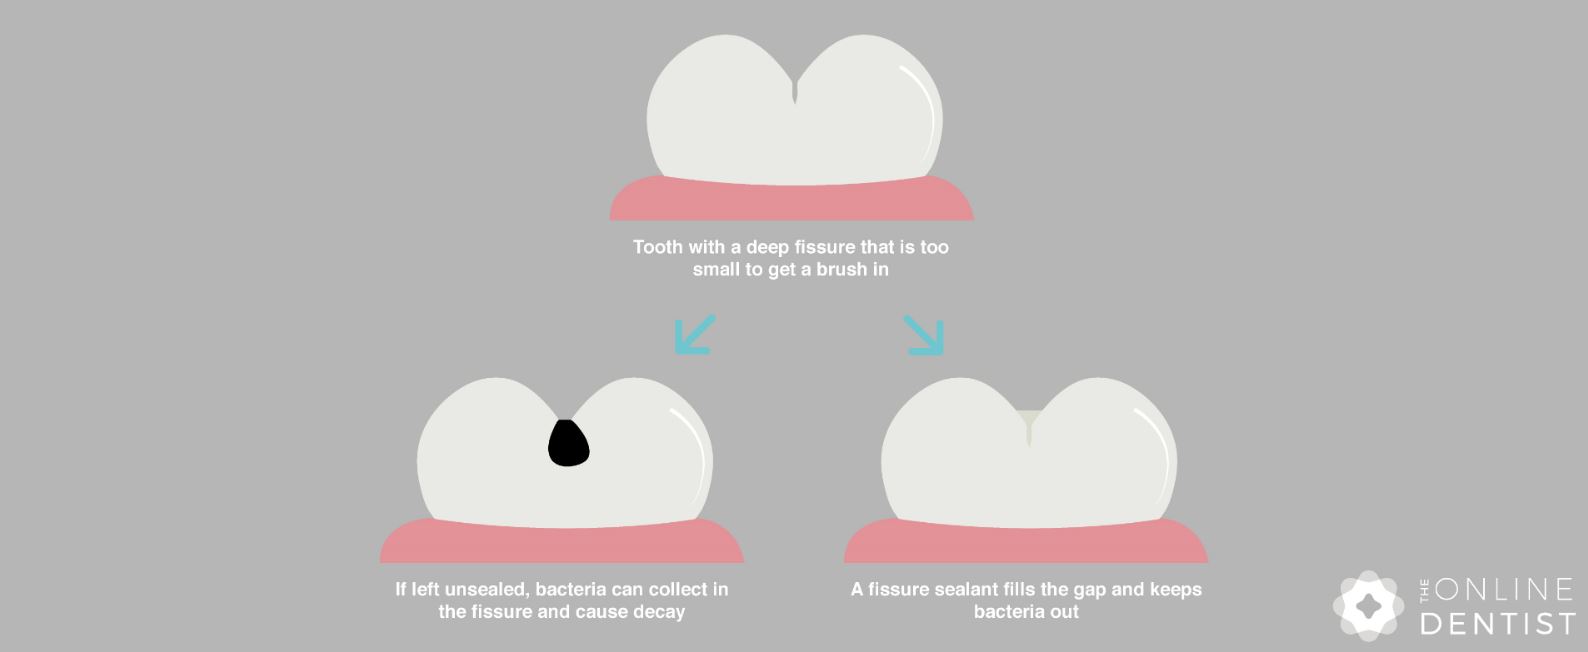 Fissure Sealants Diagram - The Online Dentist